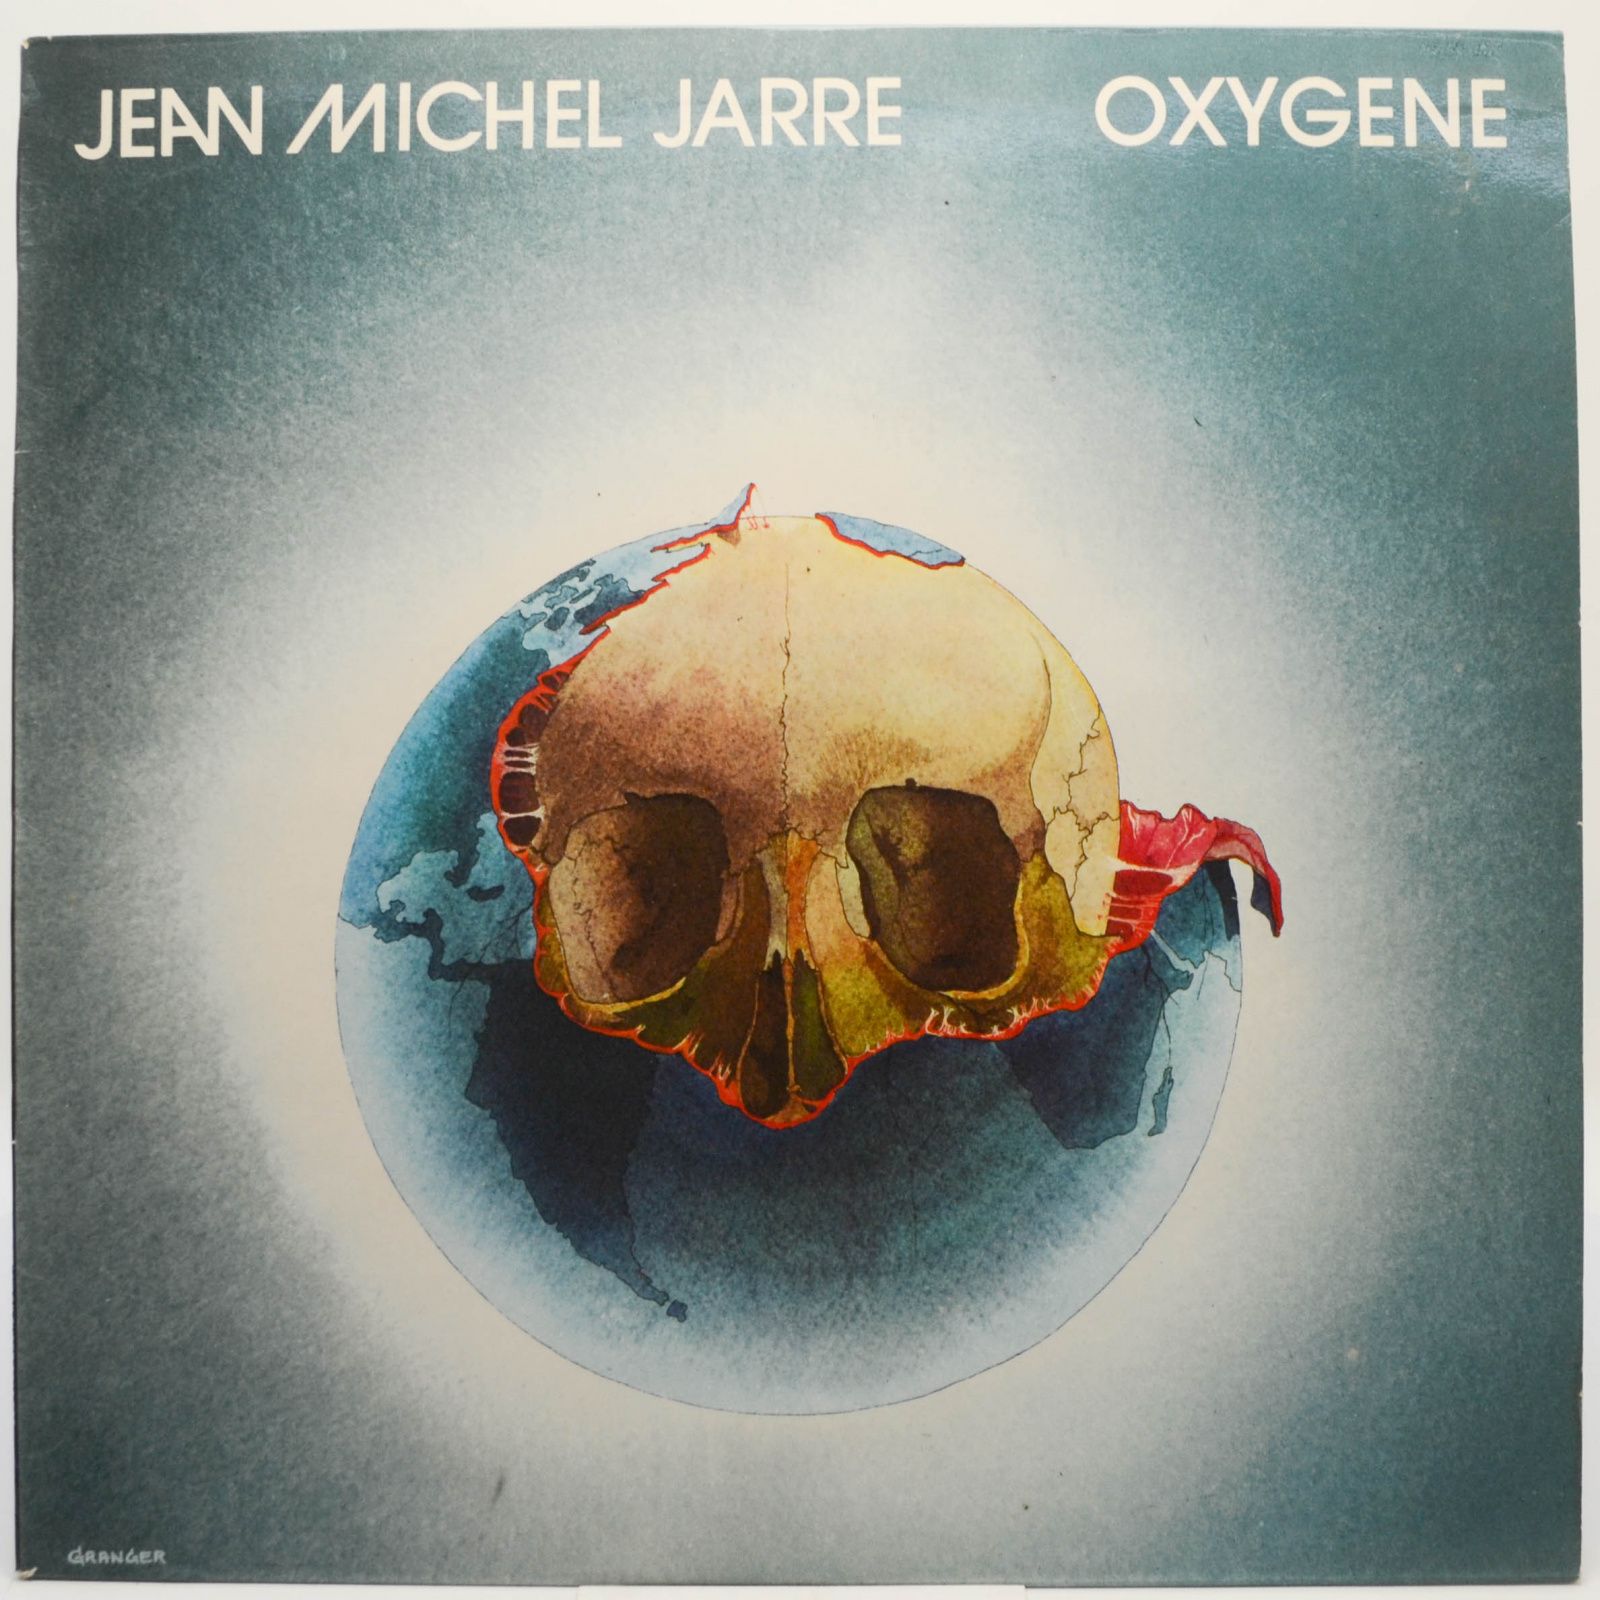 Jean Michel Jarre — Oxygene (UK), 1976